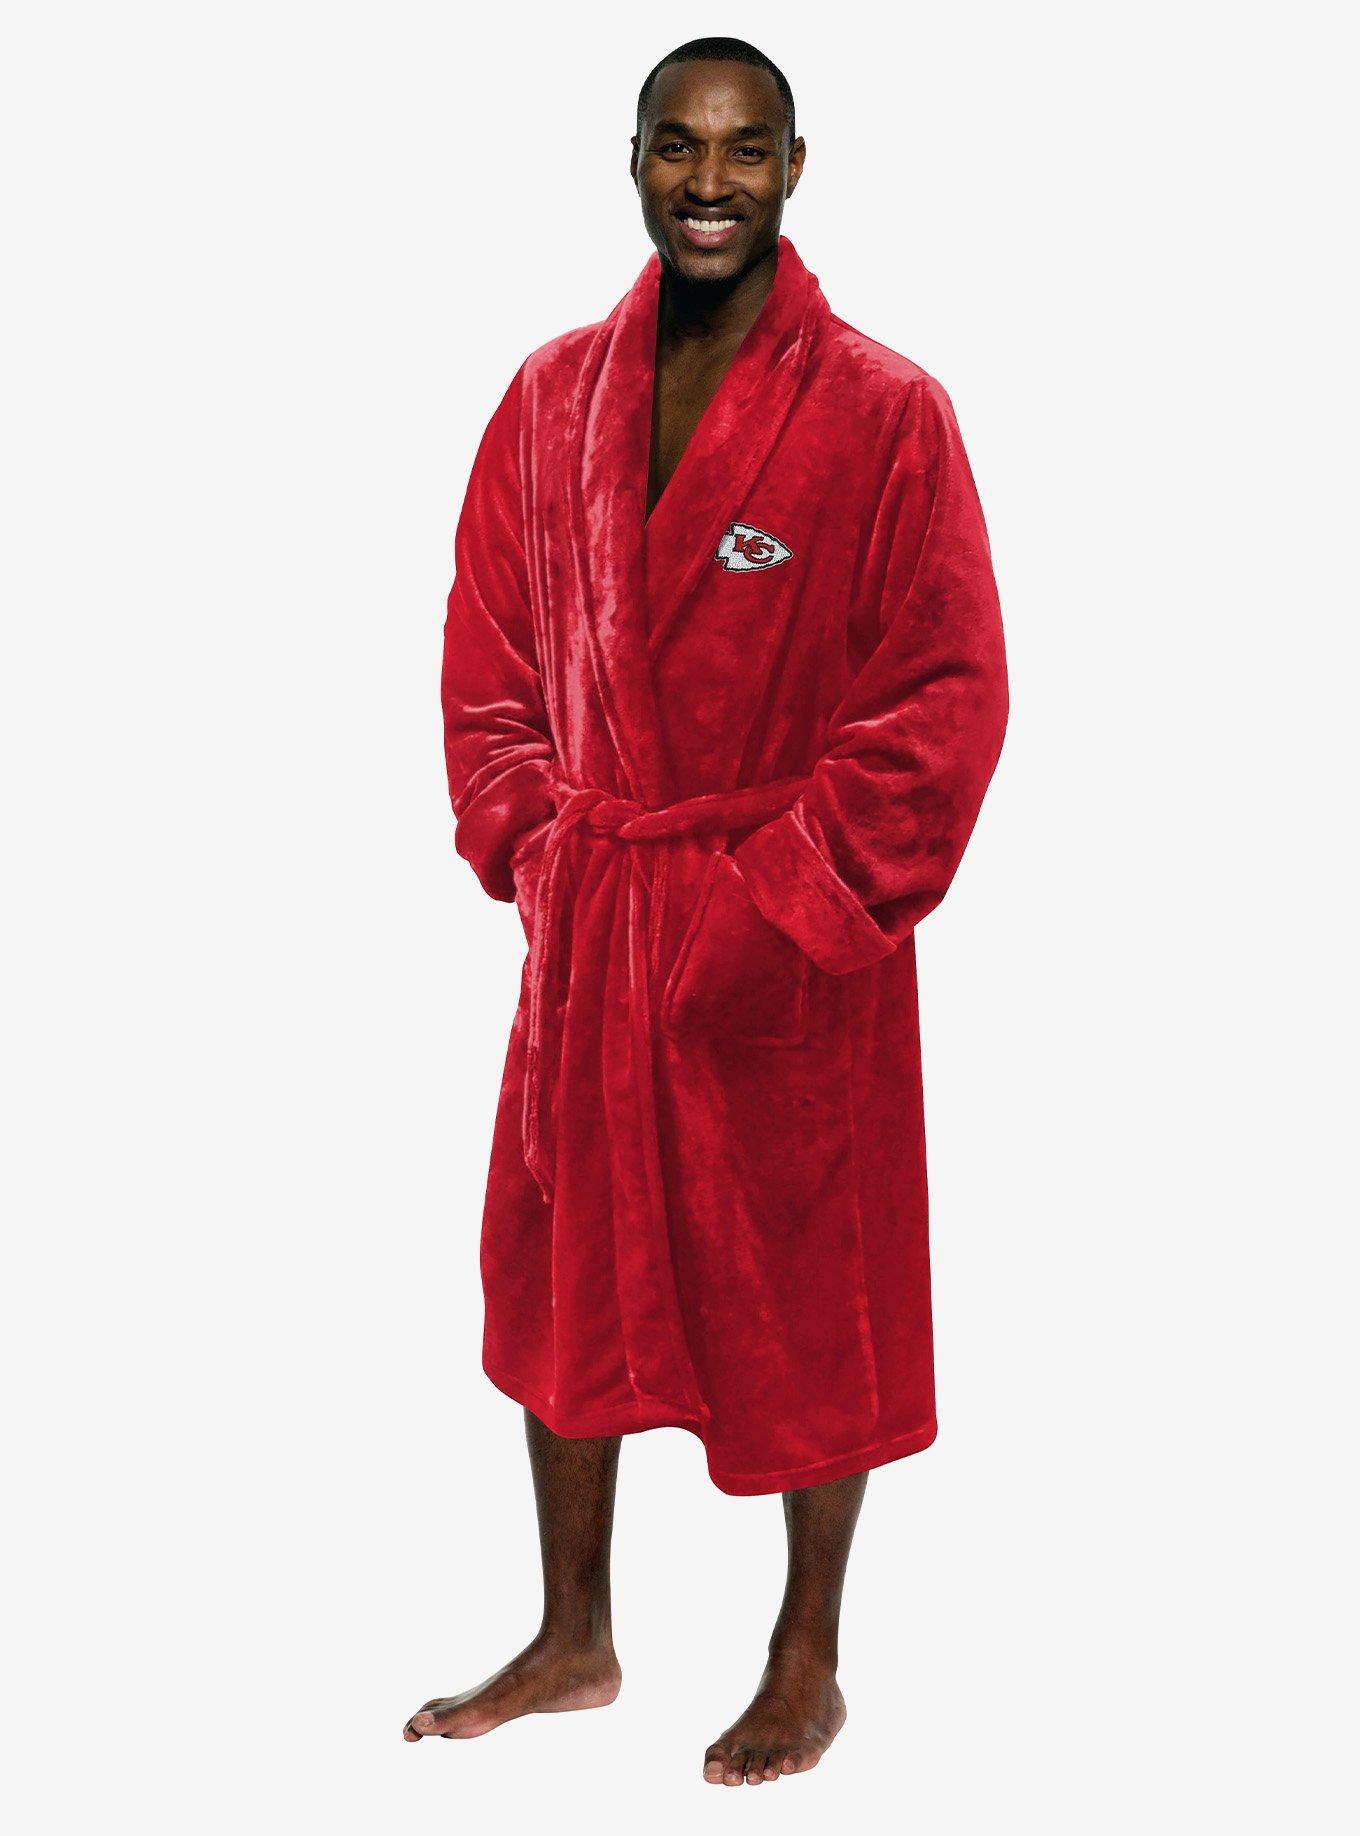 NFL Chiefs Man Bath Robe, , hi-res